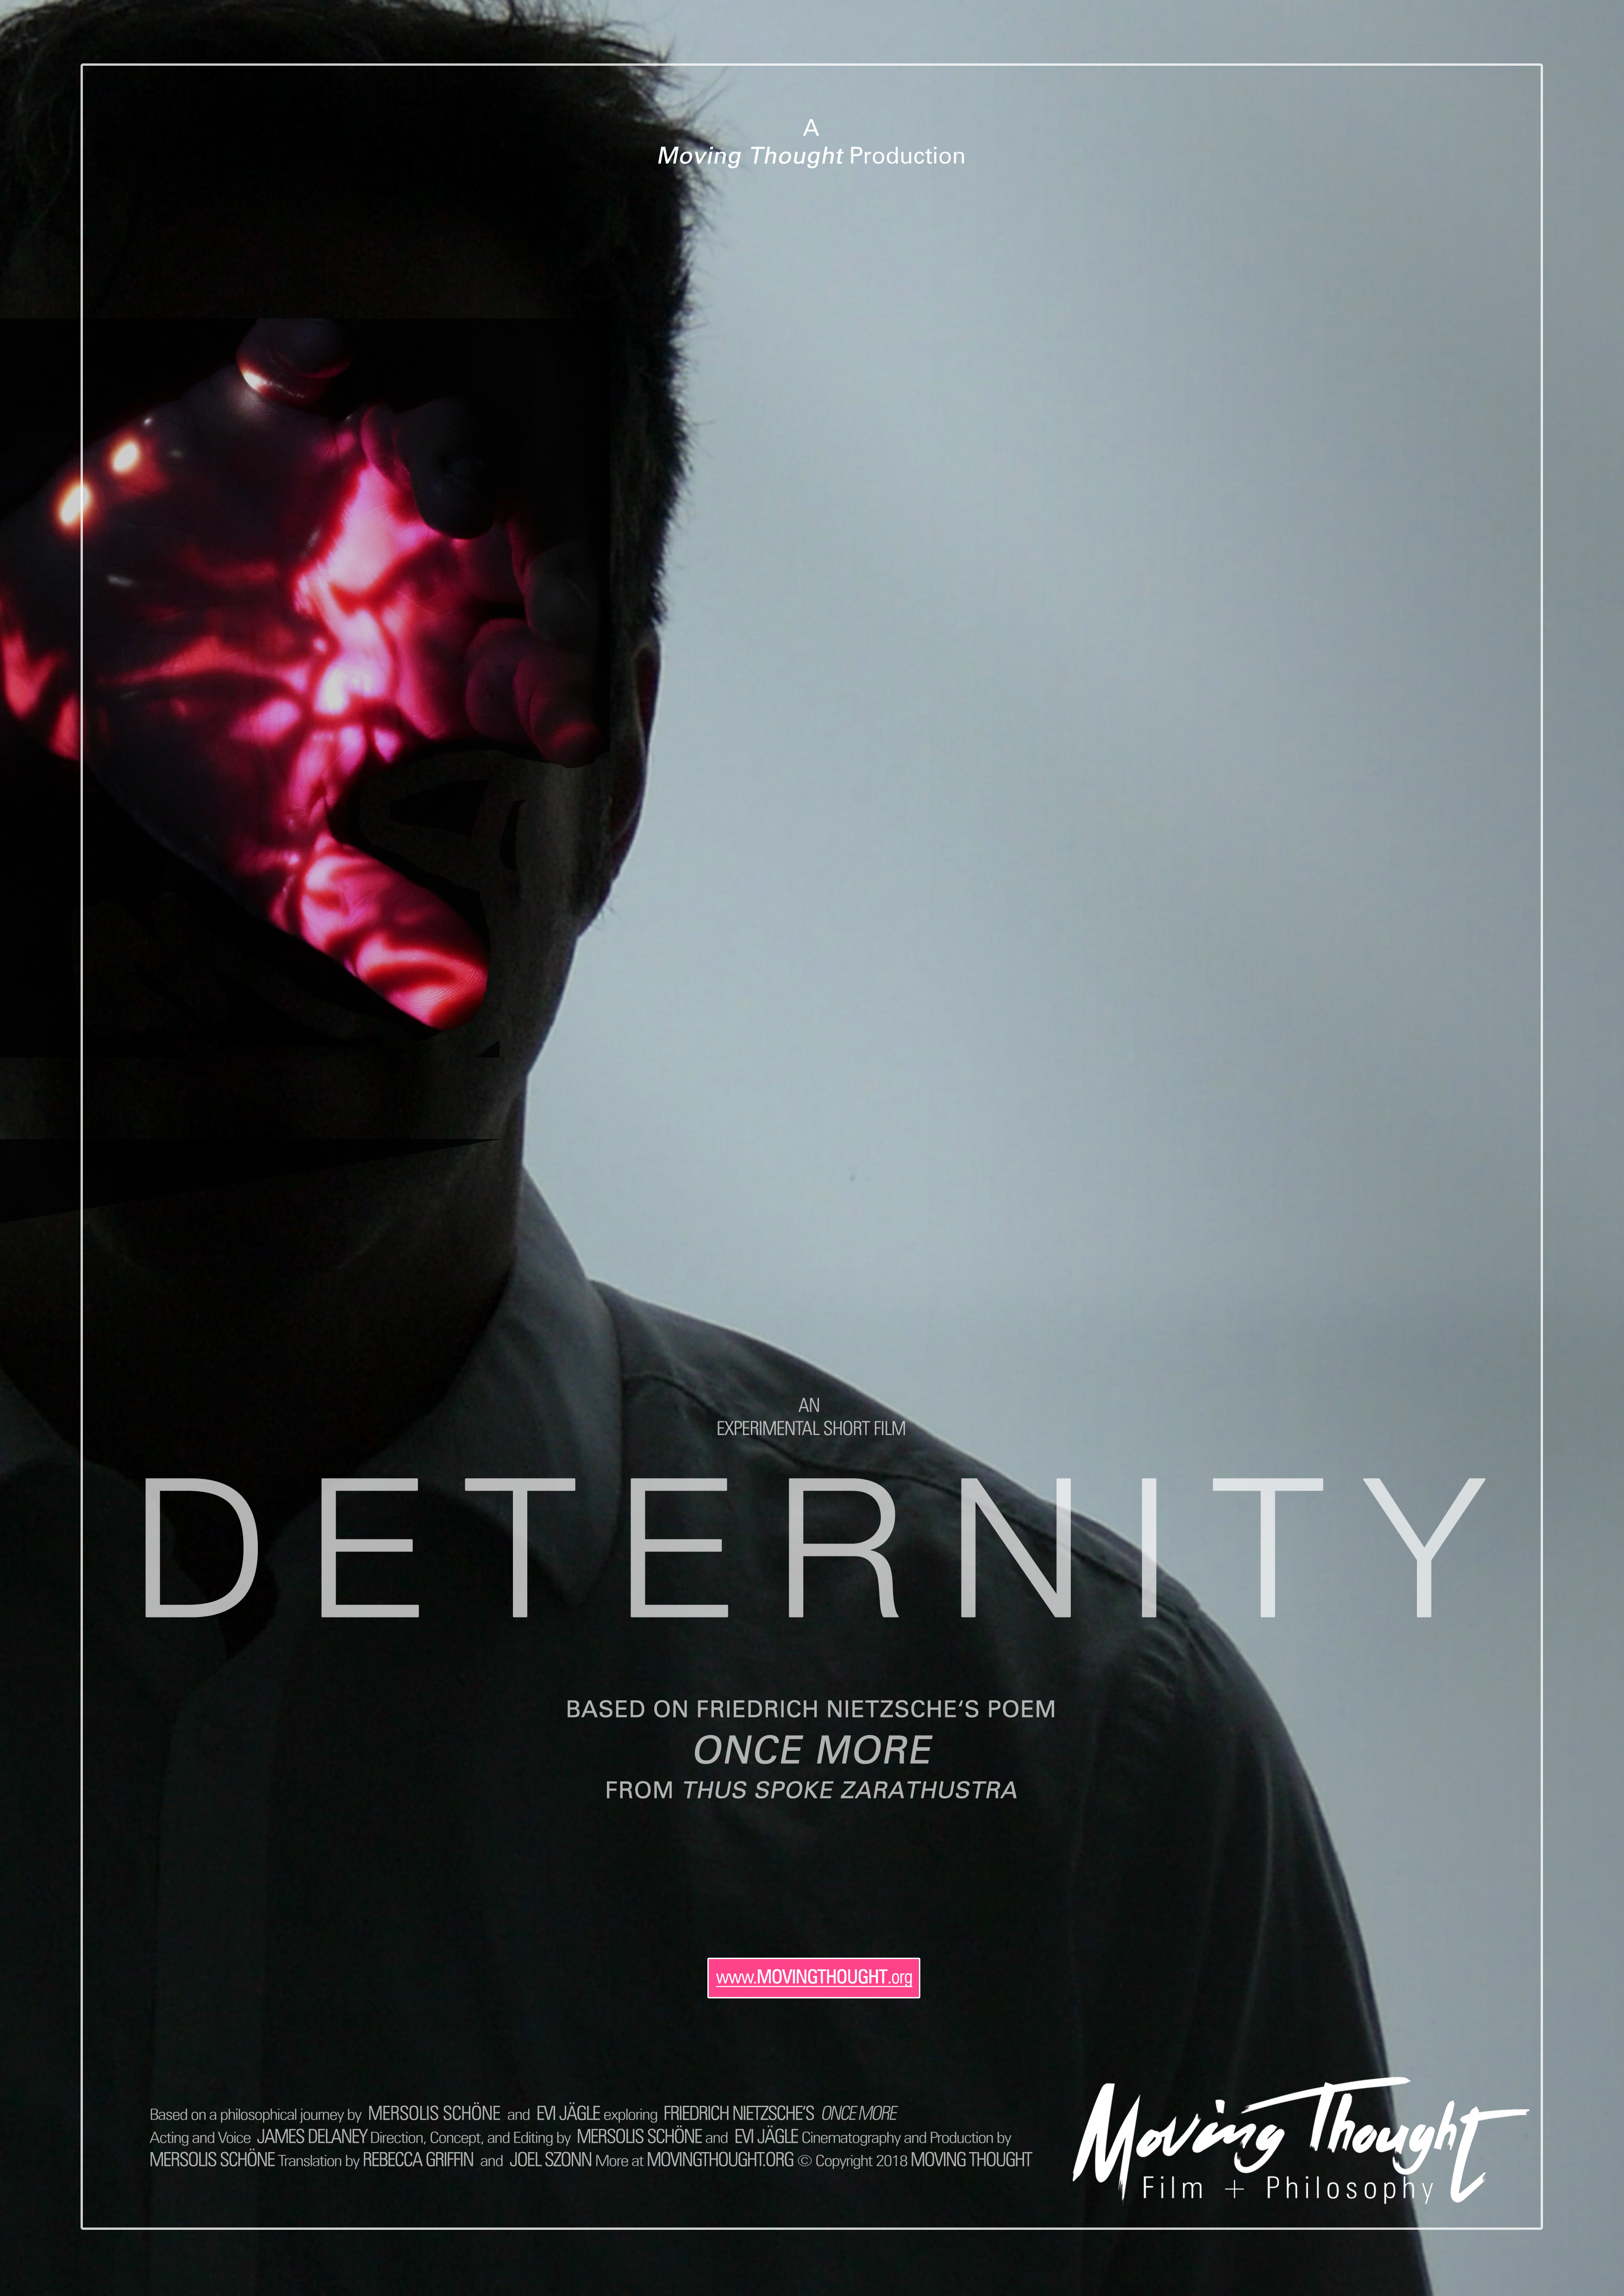 Deternity (Still) with James Delaney - by Evi Jägle and Mersolis Schöne